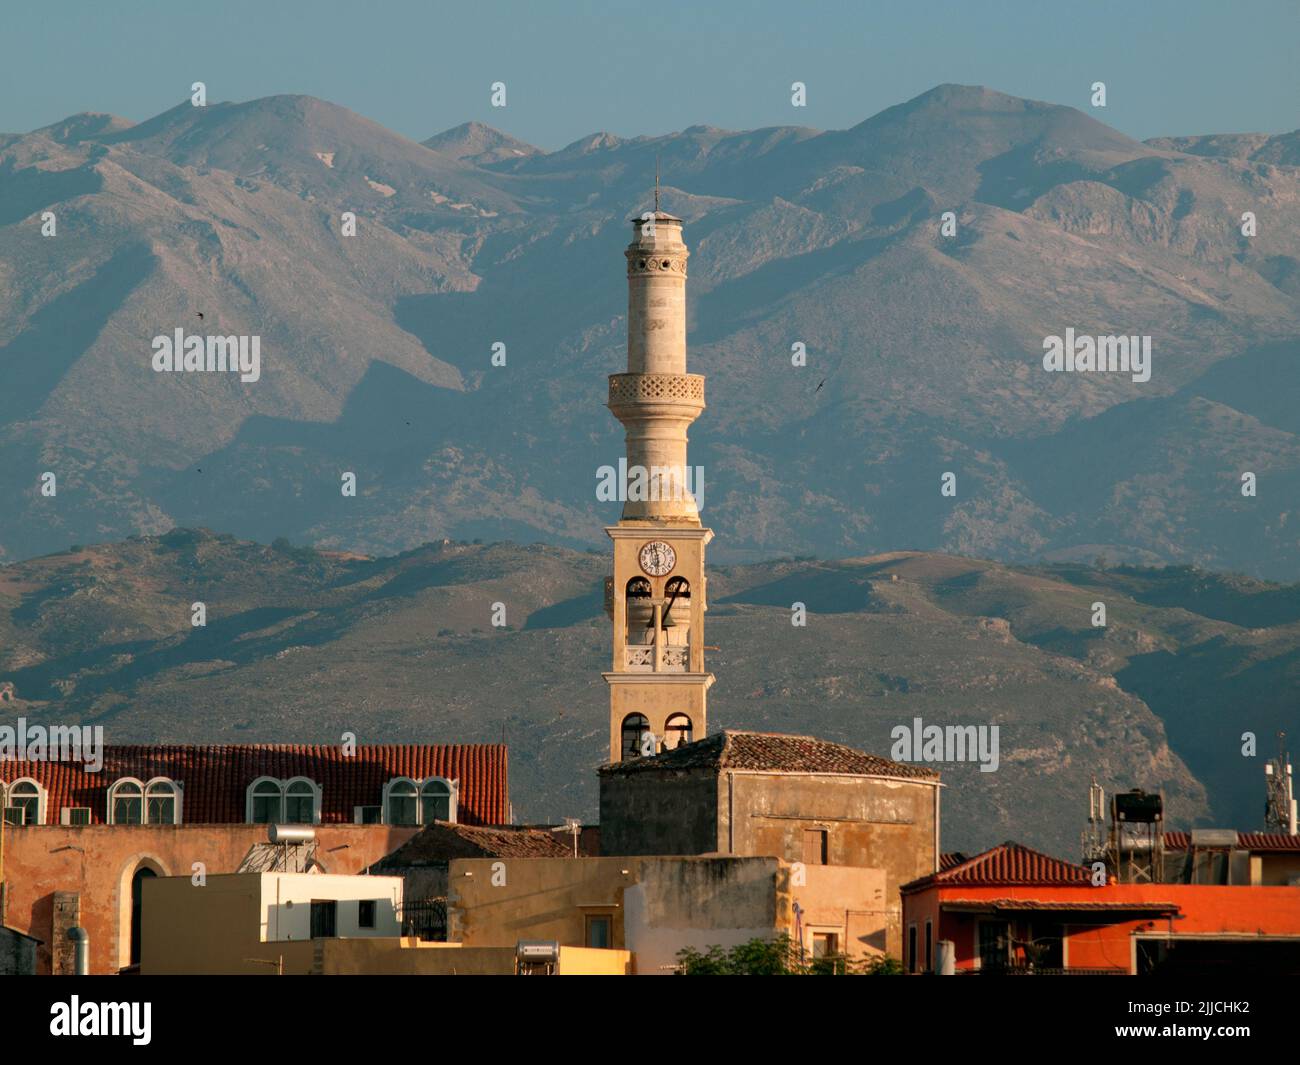 A minaret rises above the Cretan town of Chania Stock Photo